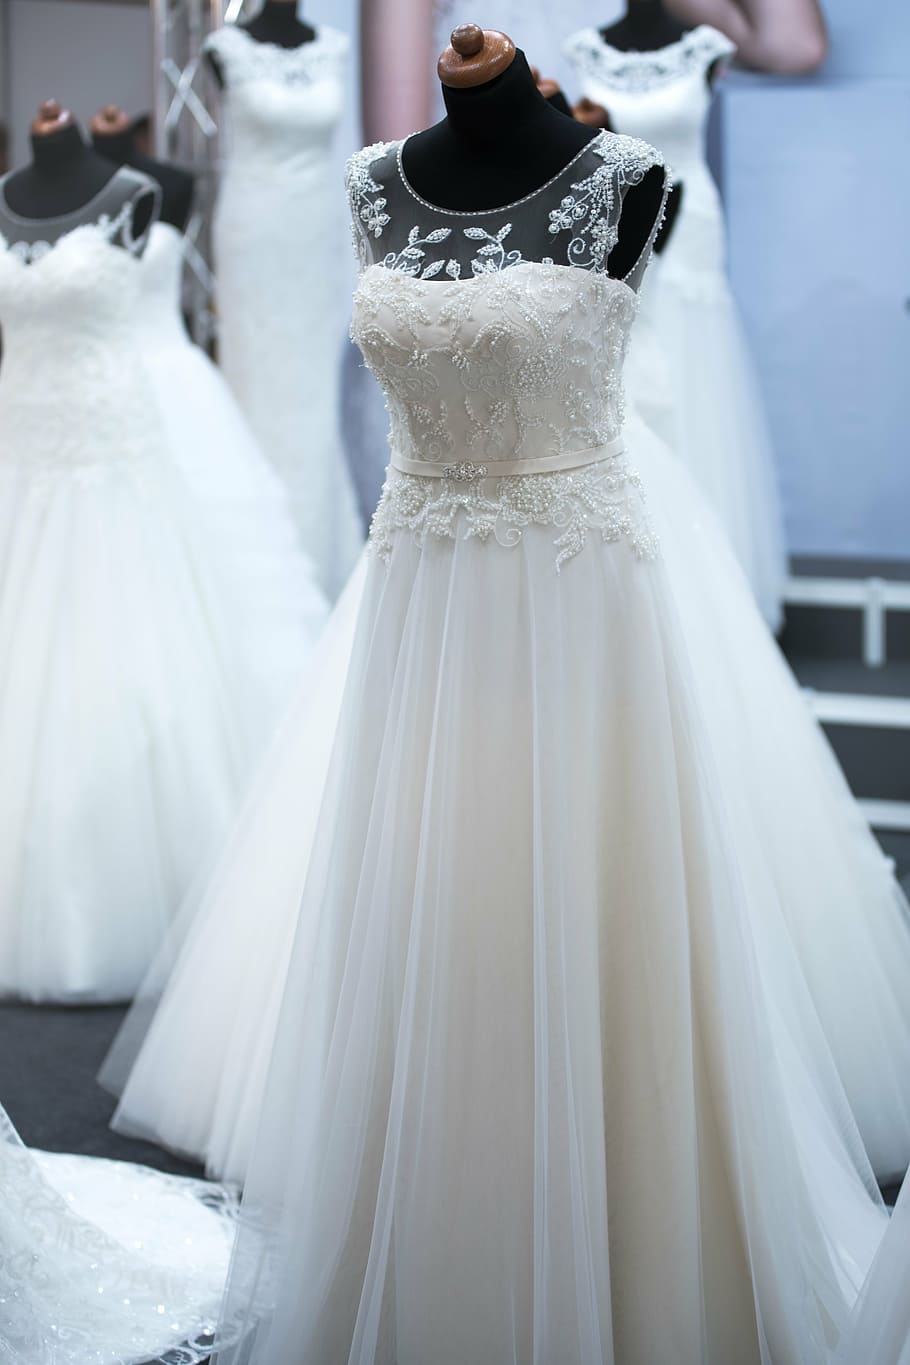 New High Quality Girl Lace Elegant Floor-Length Princess Ball Gown Wedding  Dress | eBay